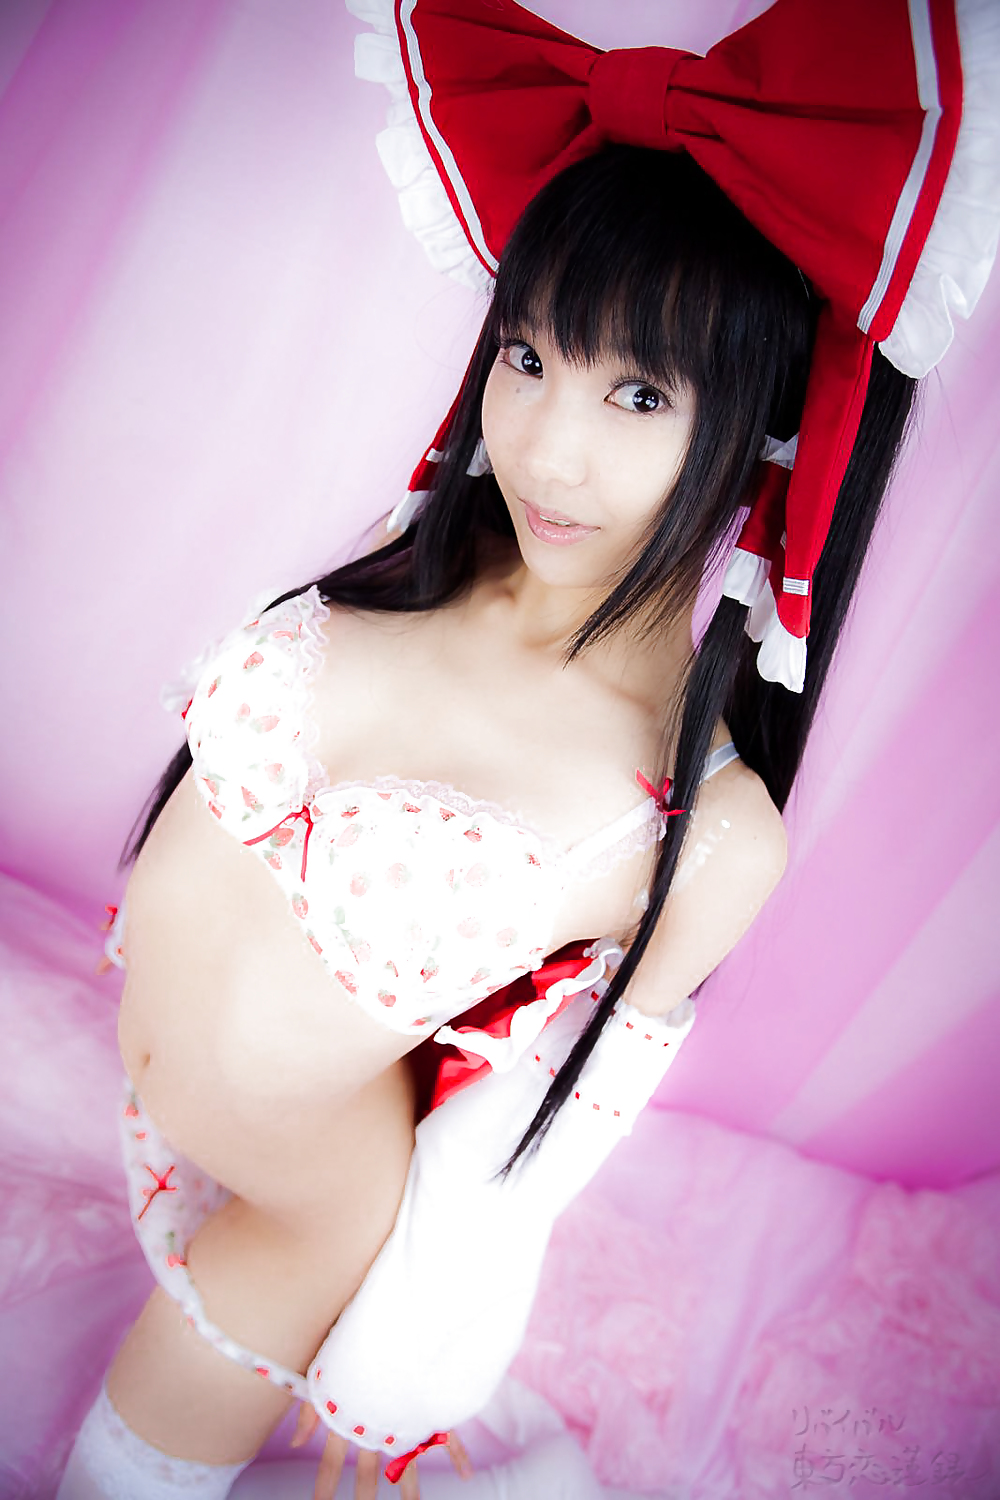 Ragazza cosplay giapponese lenfried sexy 2
 #6190161